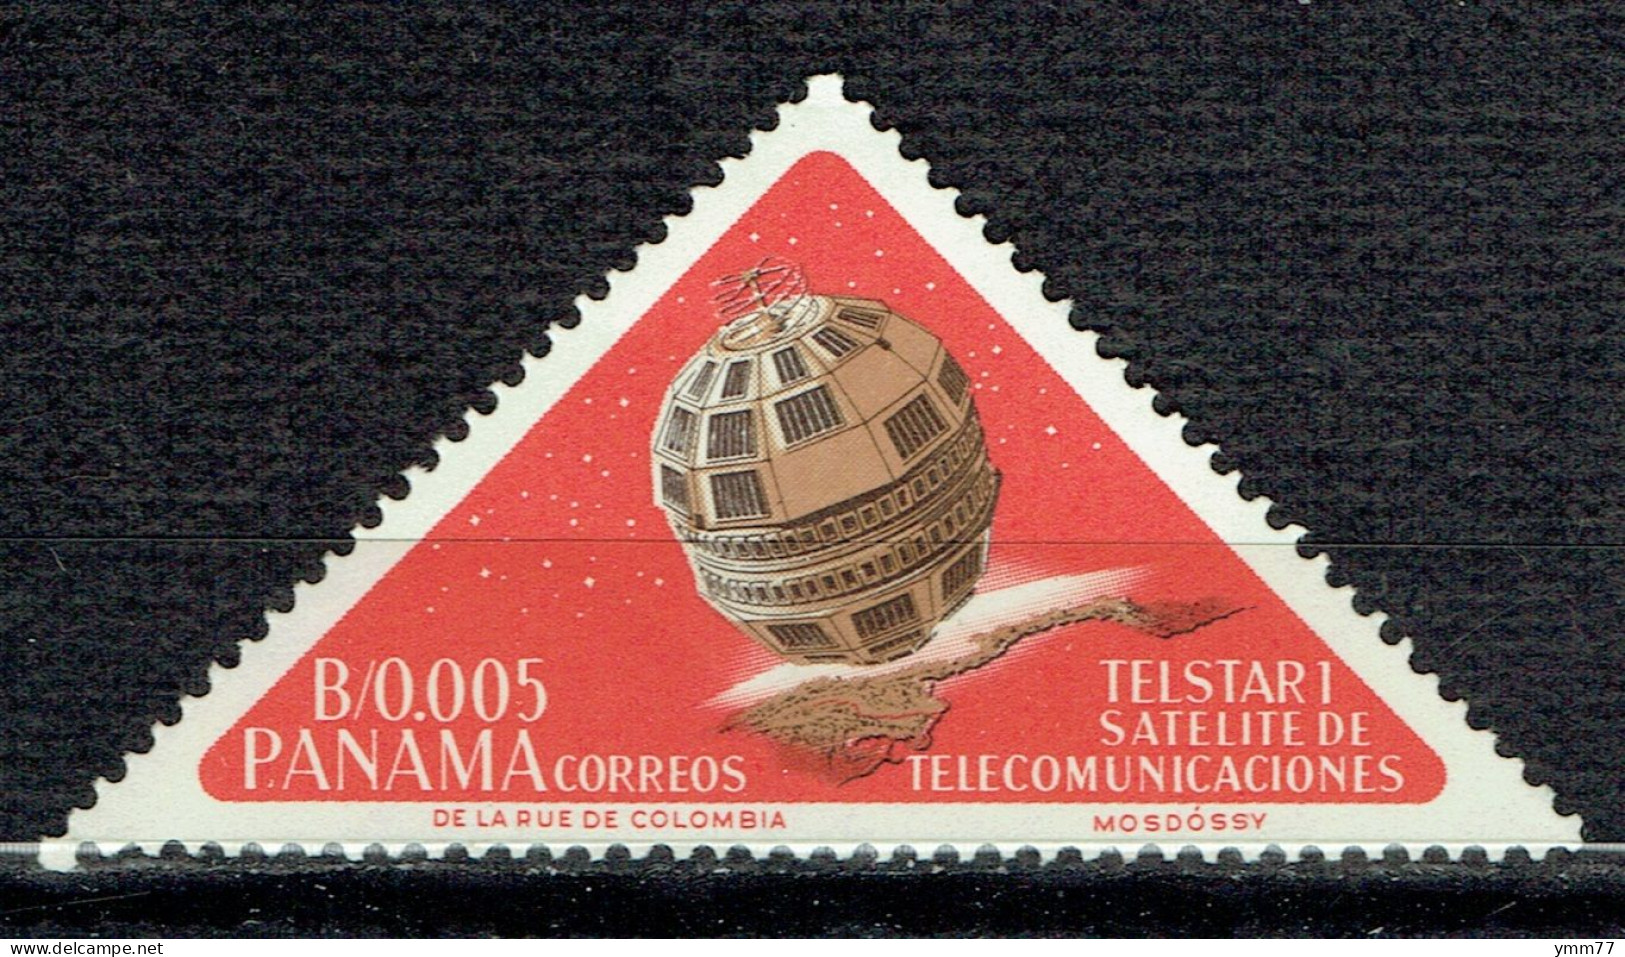 Astronautique : Telstar 1 - Panamá